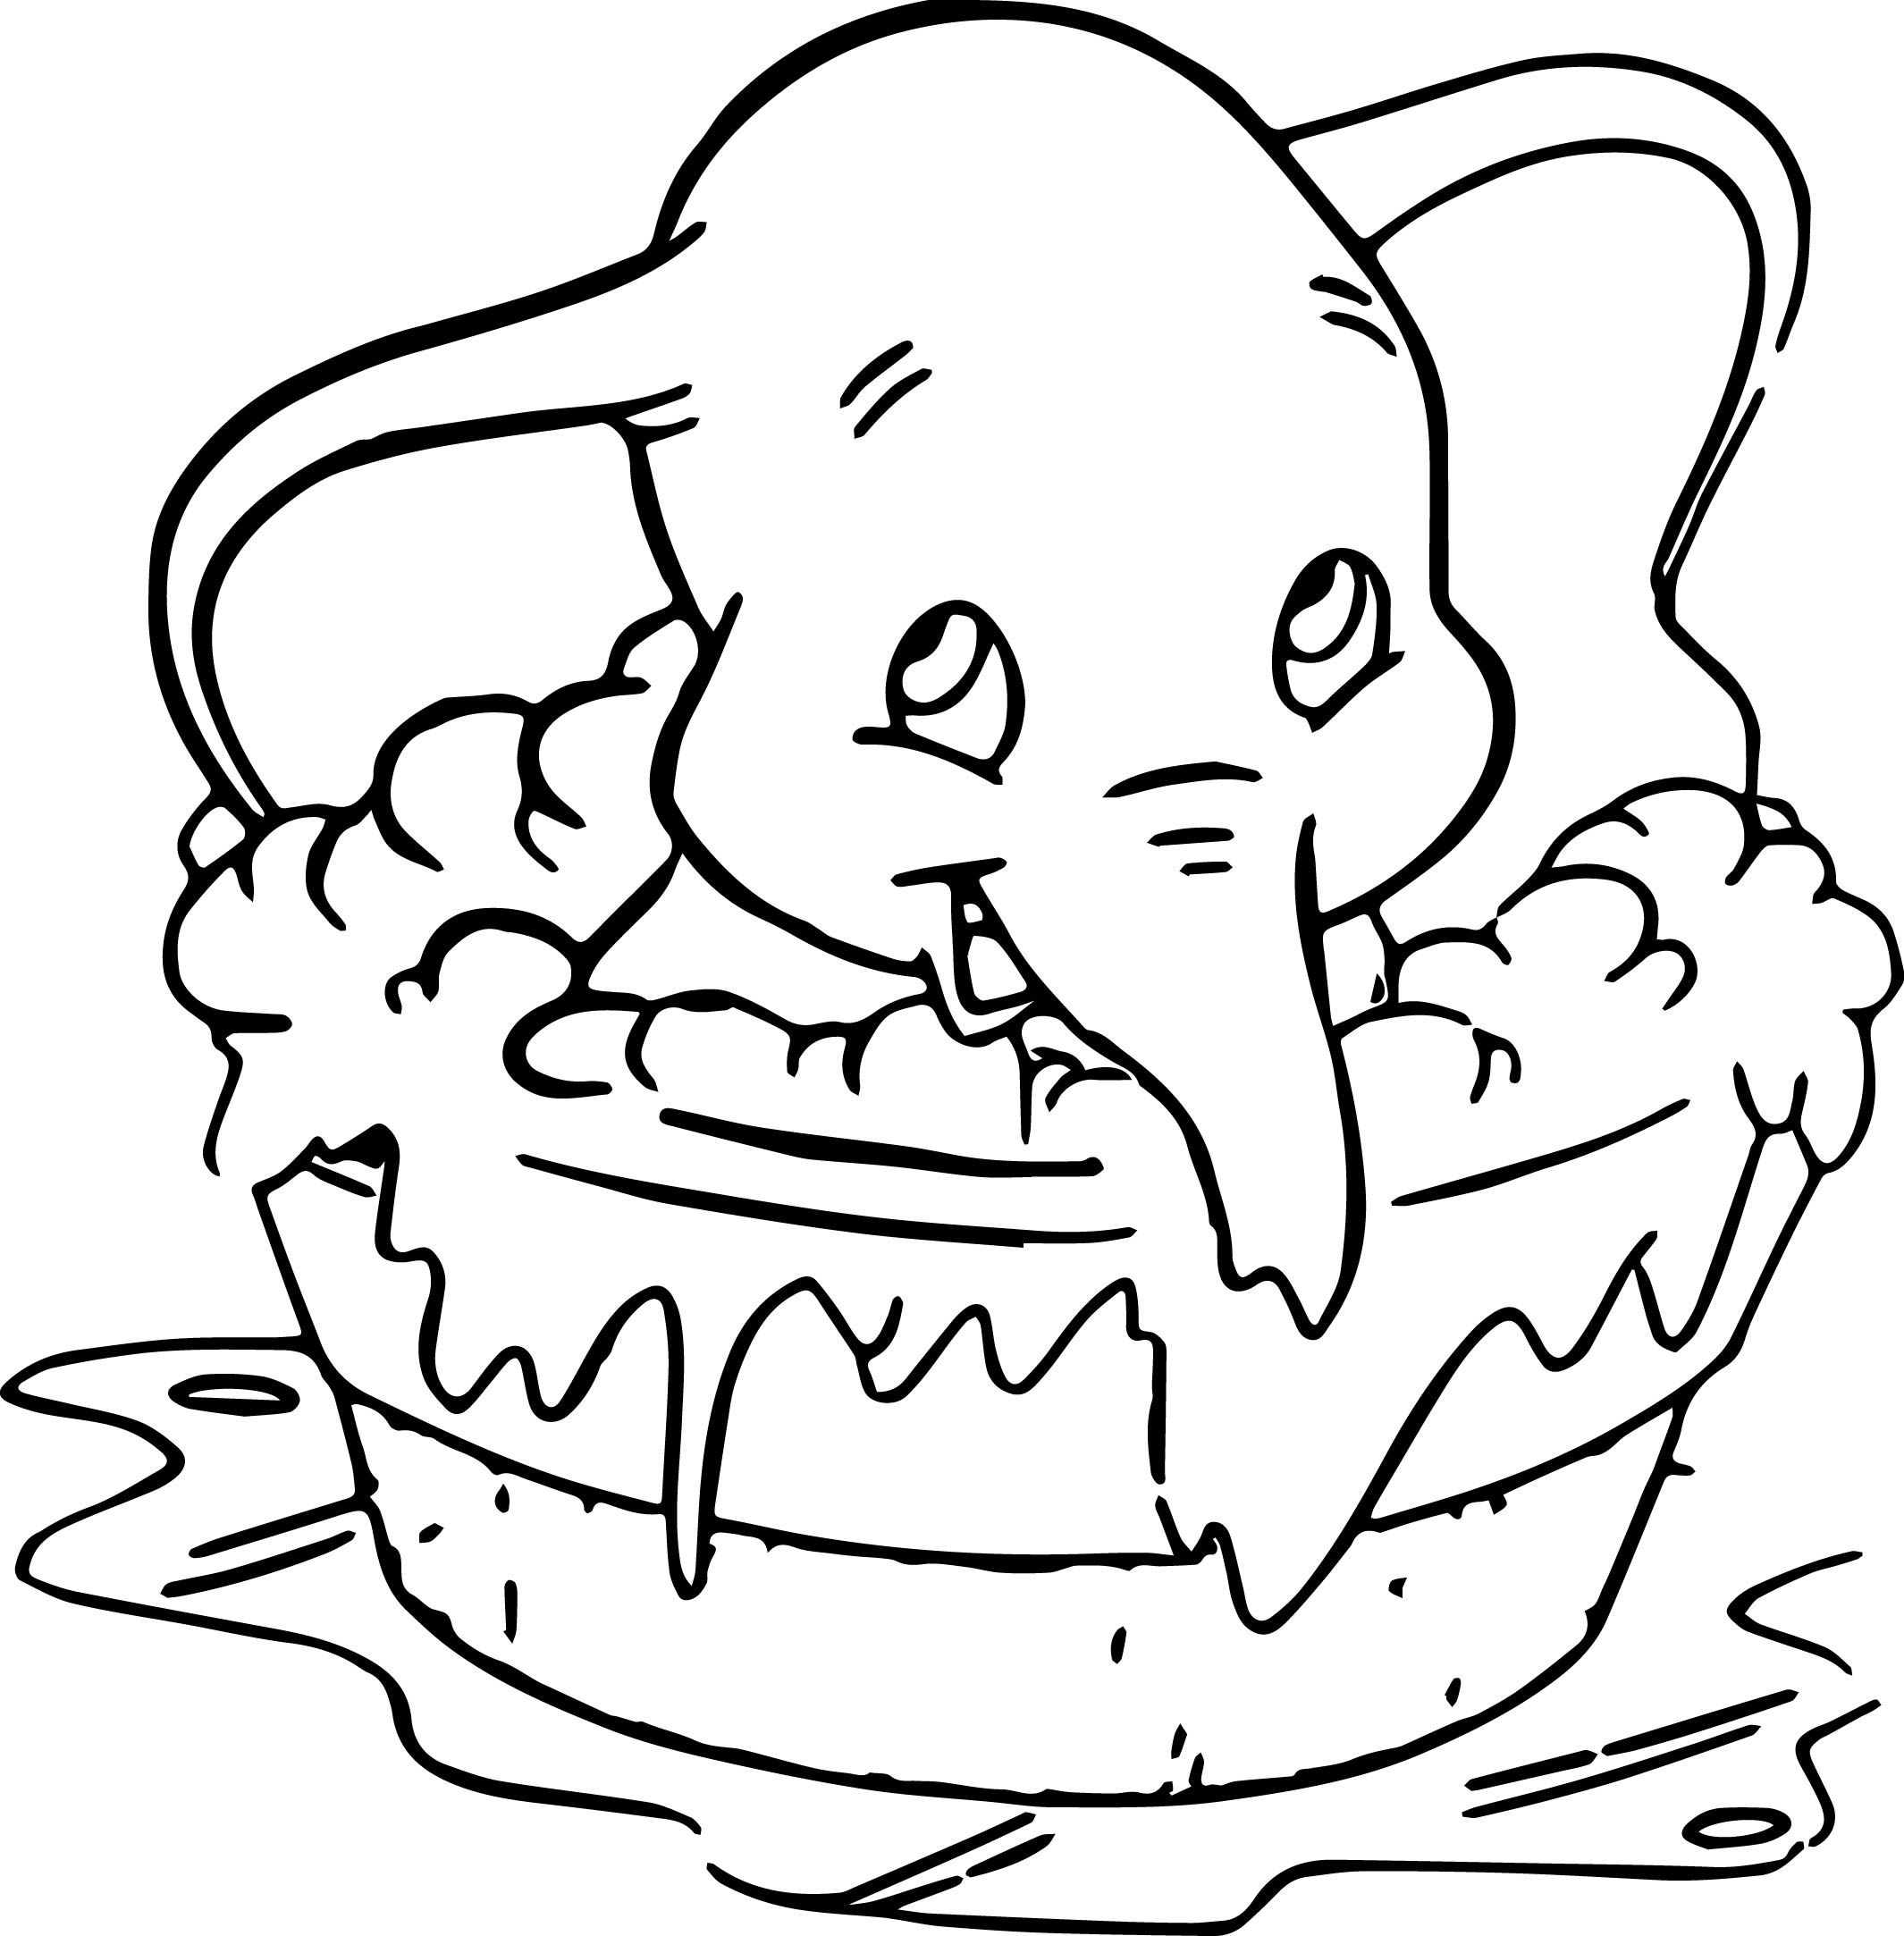 Dibujo para colorear: Dumbo (Películas de animación) #170587 - Dibujos para Colorear e Imprimir Gratis